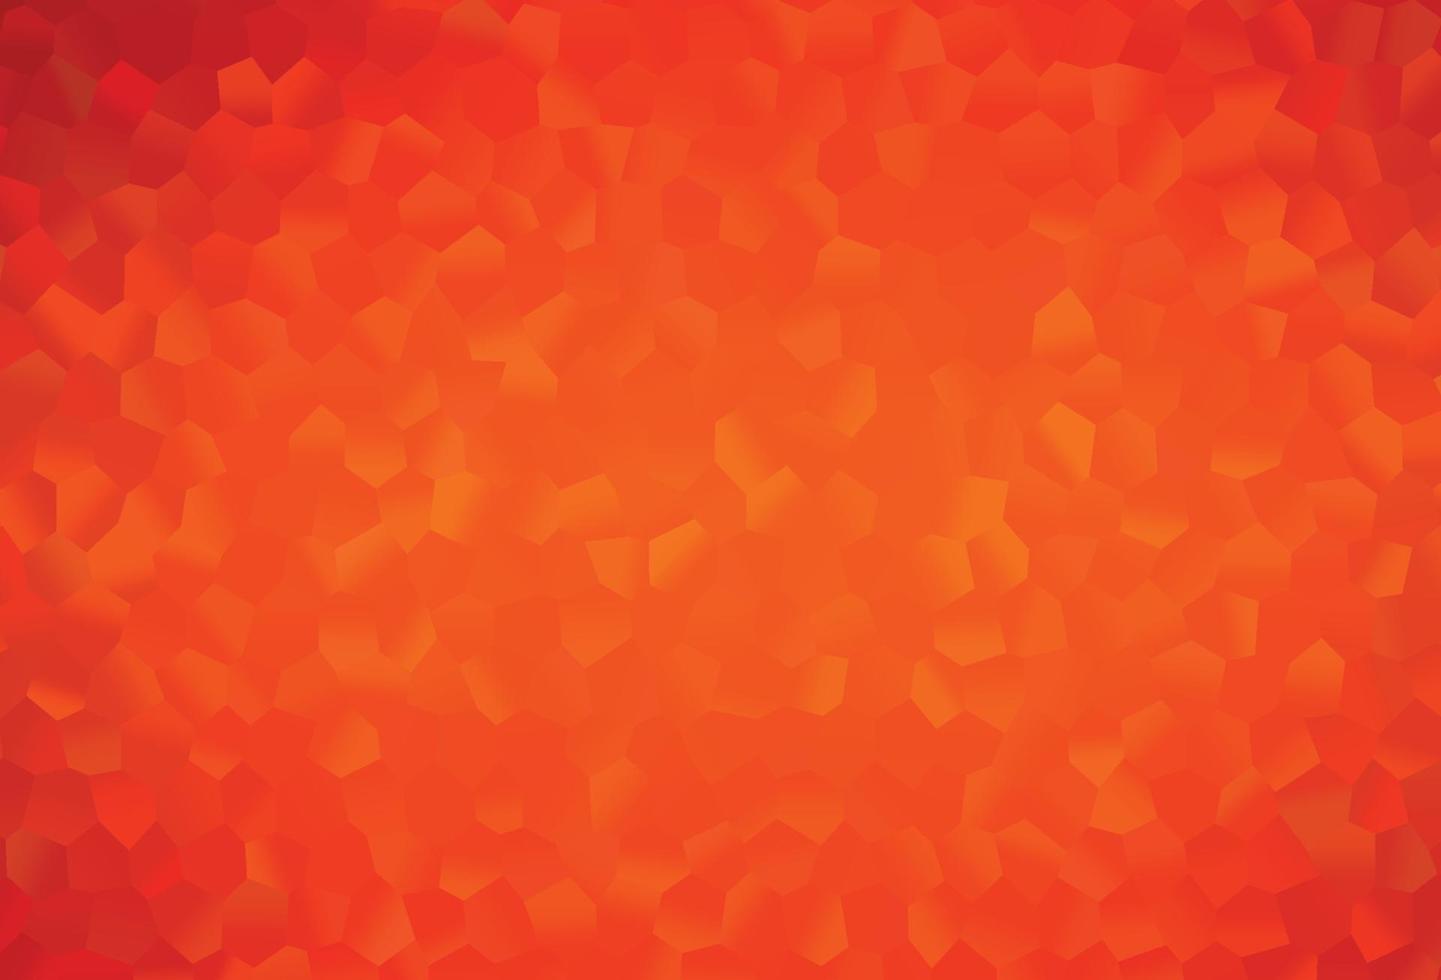 capa de vetor laranja clara com conjunto de hexágonos.